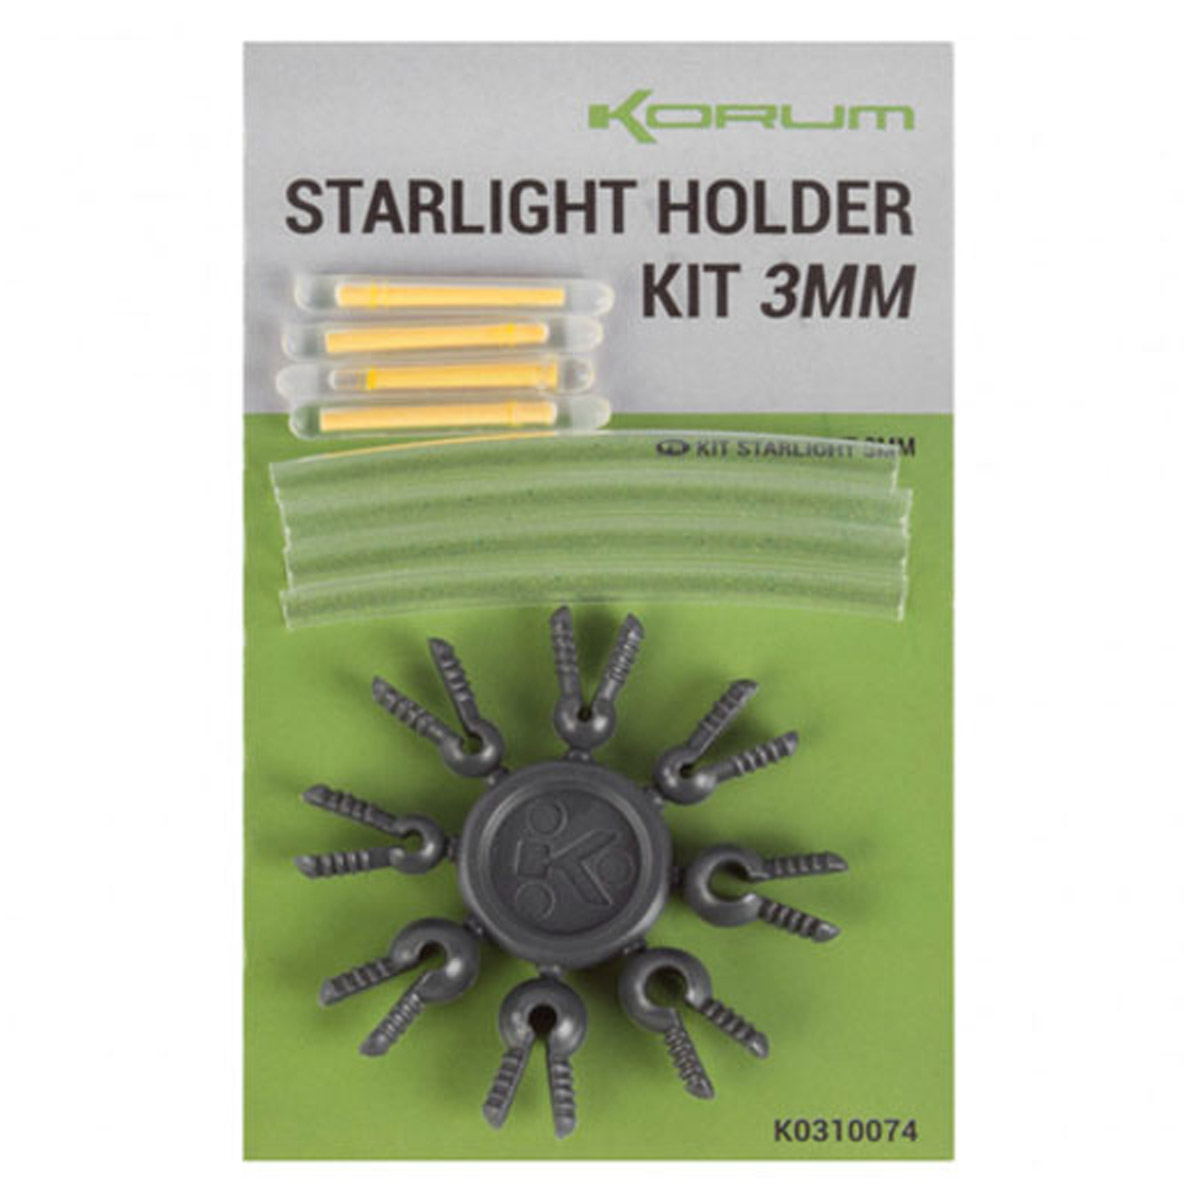 Korum Starlight Holder Kit 3 MM